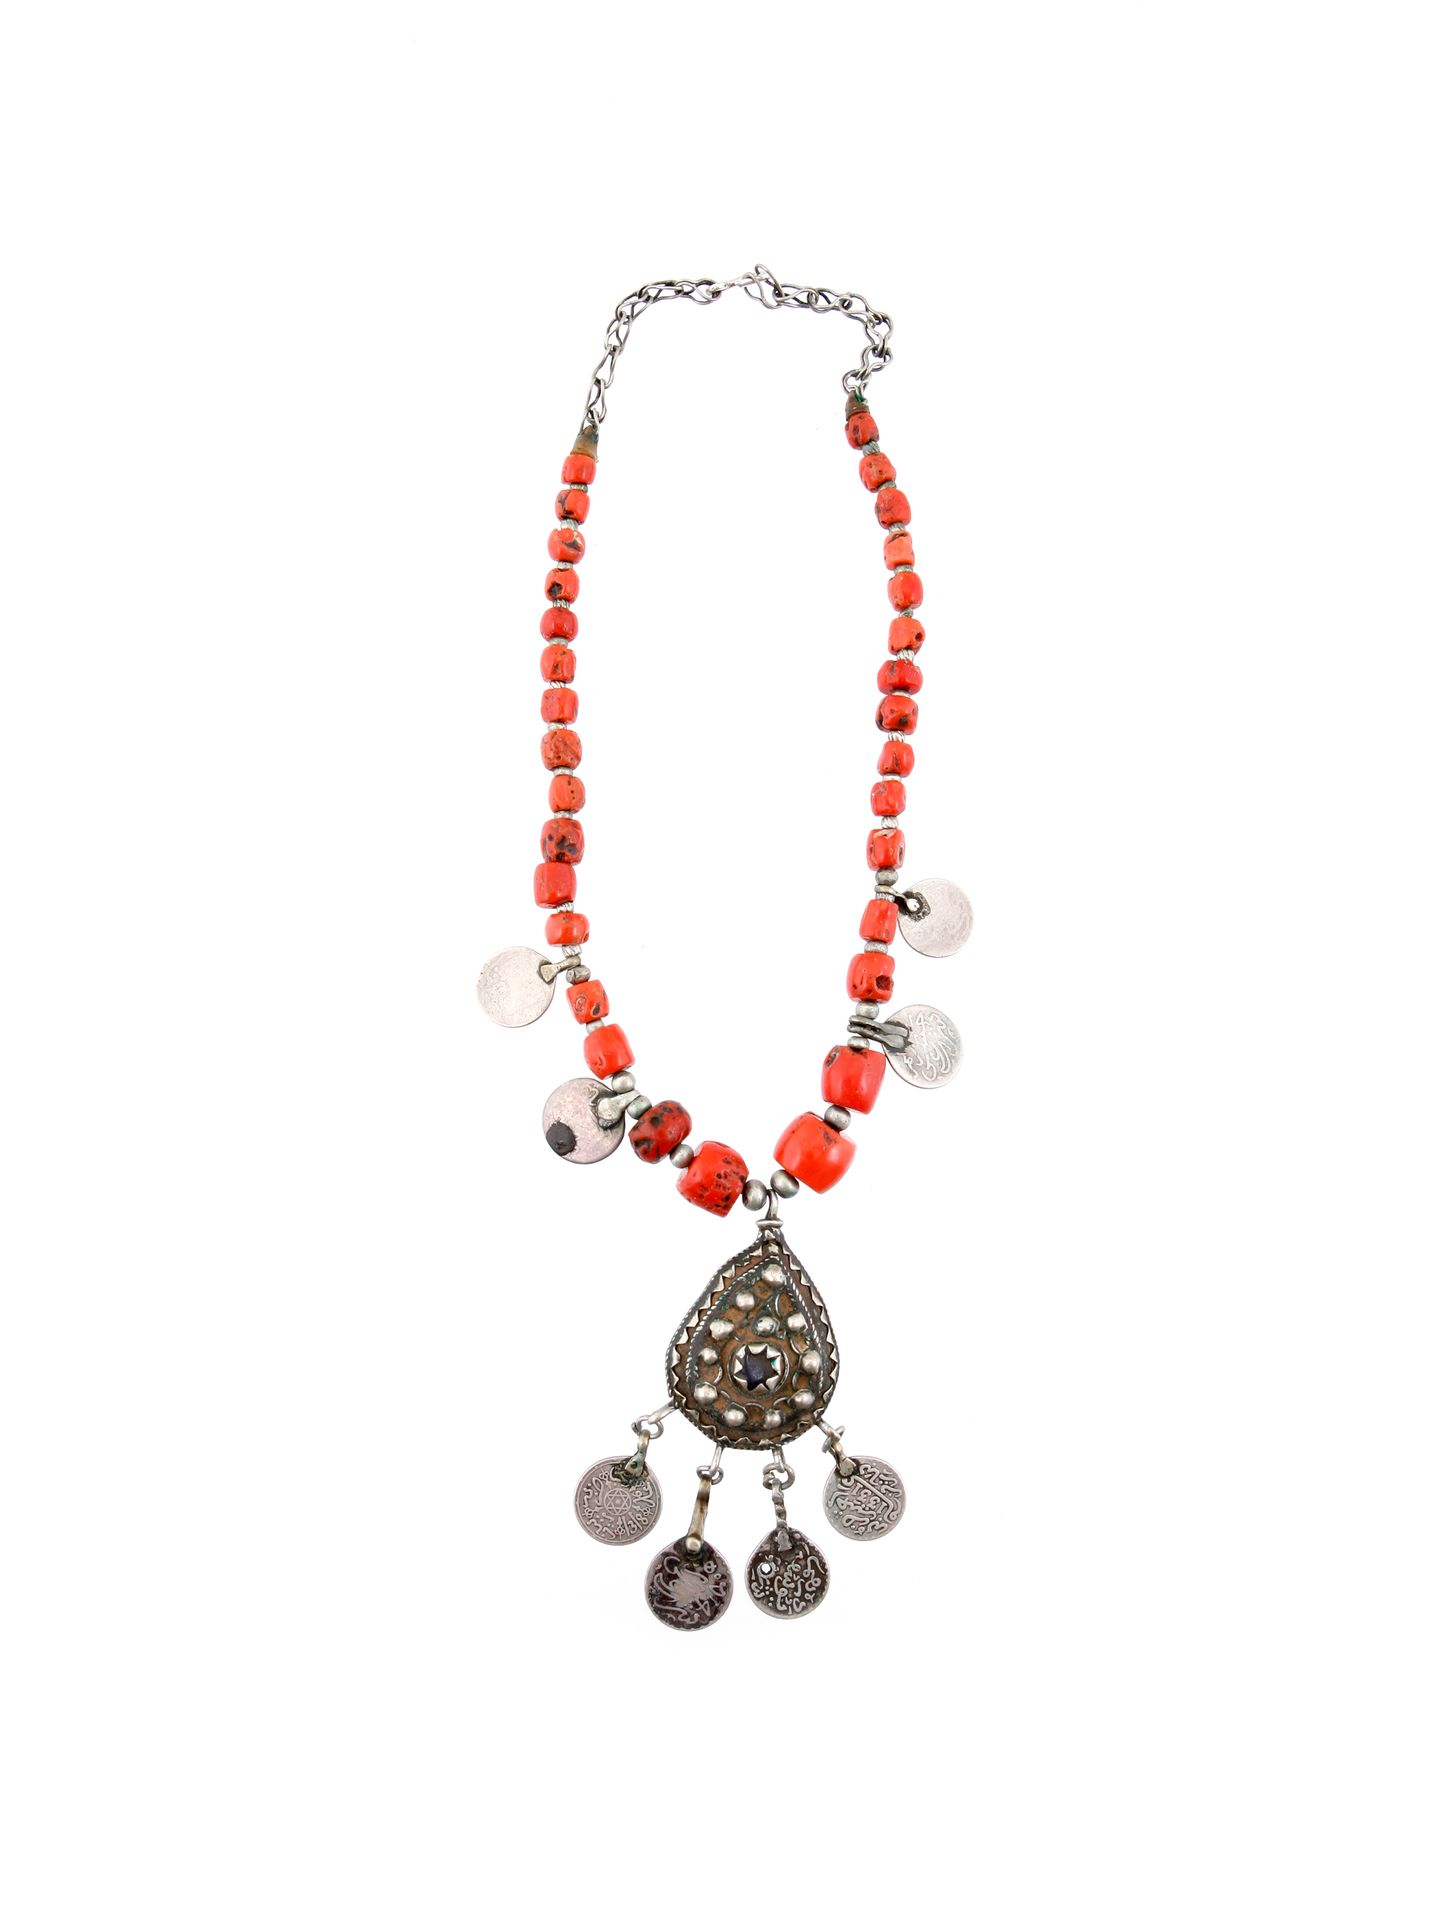 A Berber Necklace with five Pendants Collar con 5 colgantes de joyería

Bereber,&hellip;